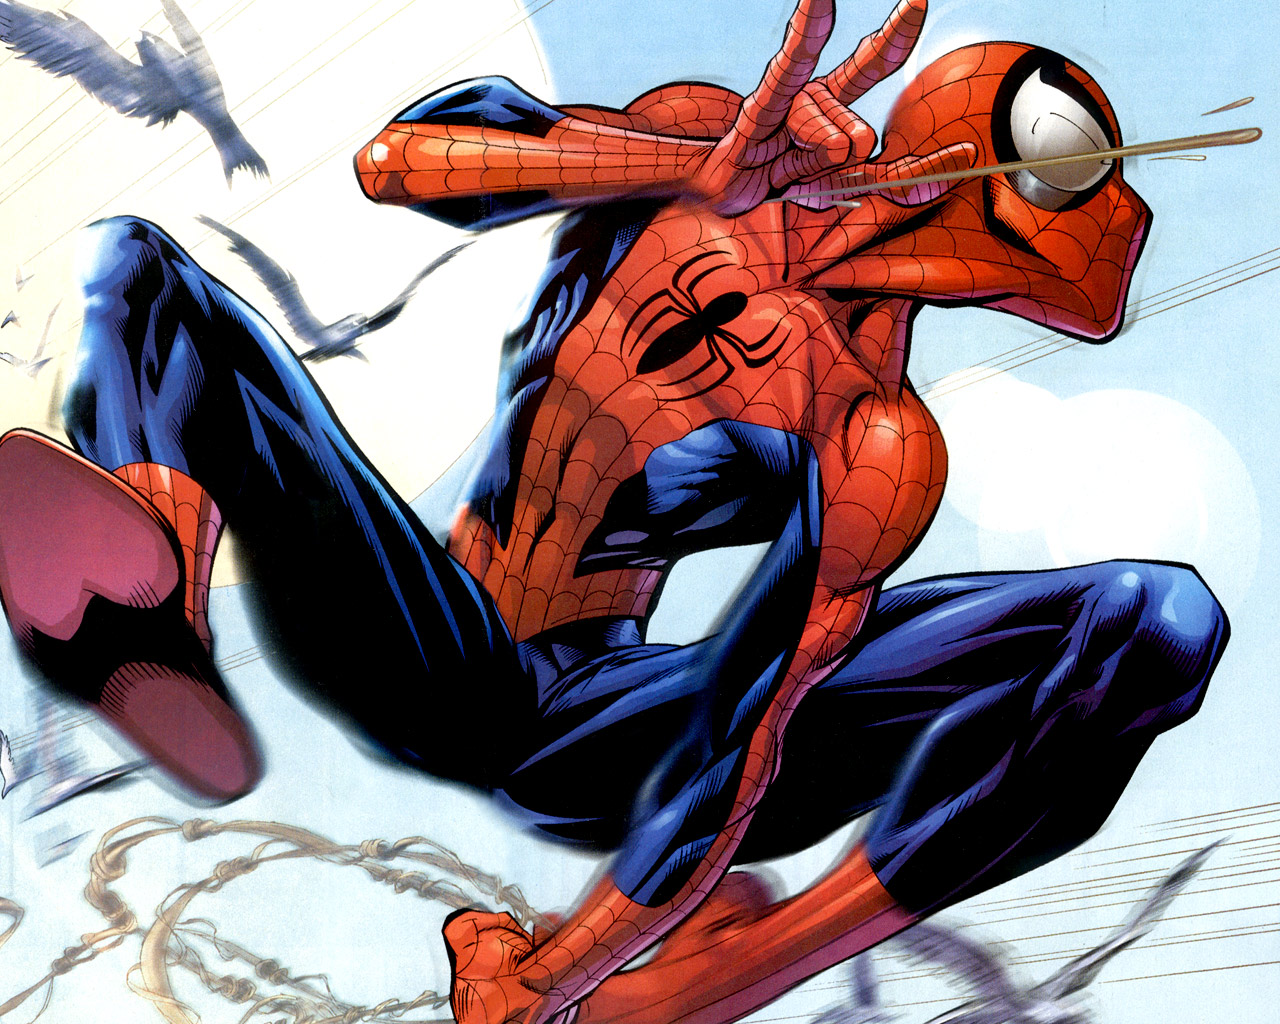  The Amazing Spider-Man 2 (2014) Fragman#1